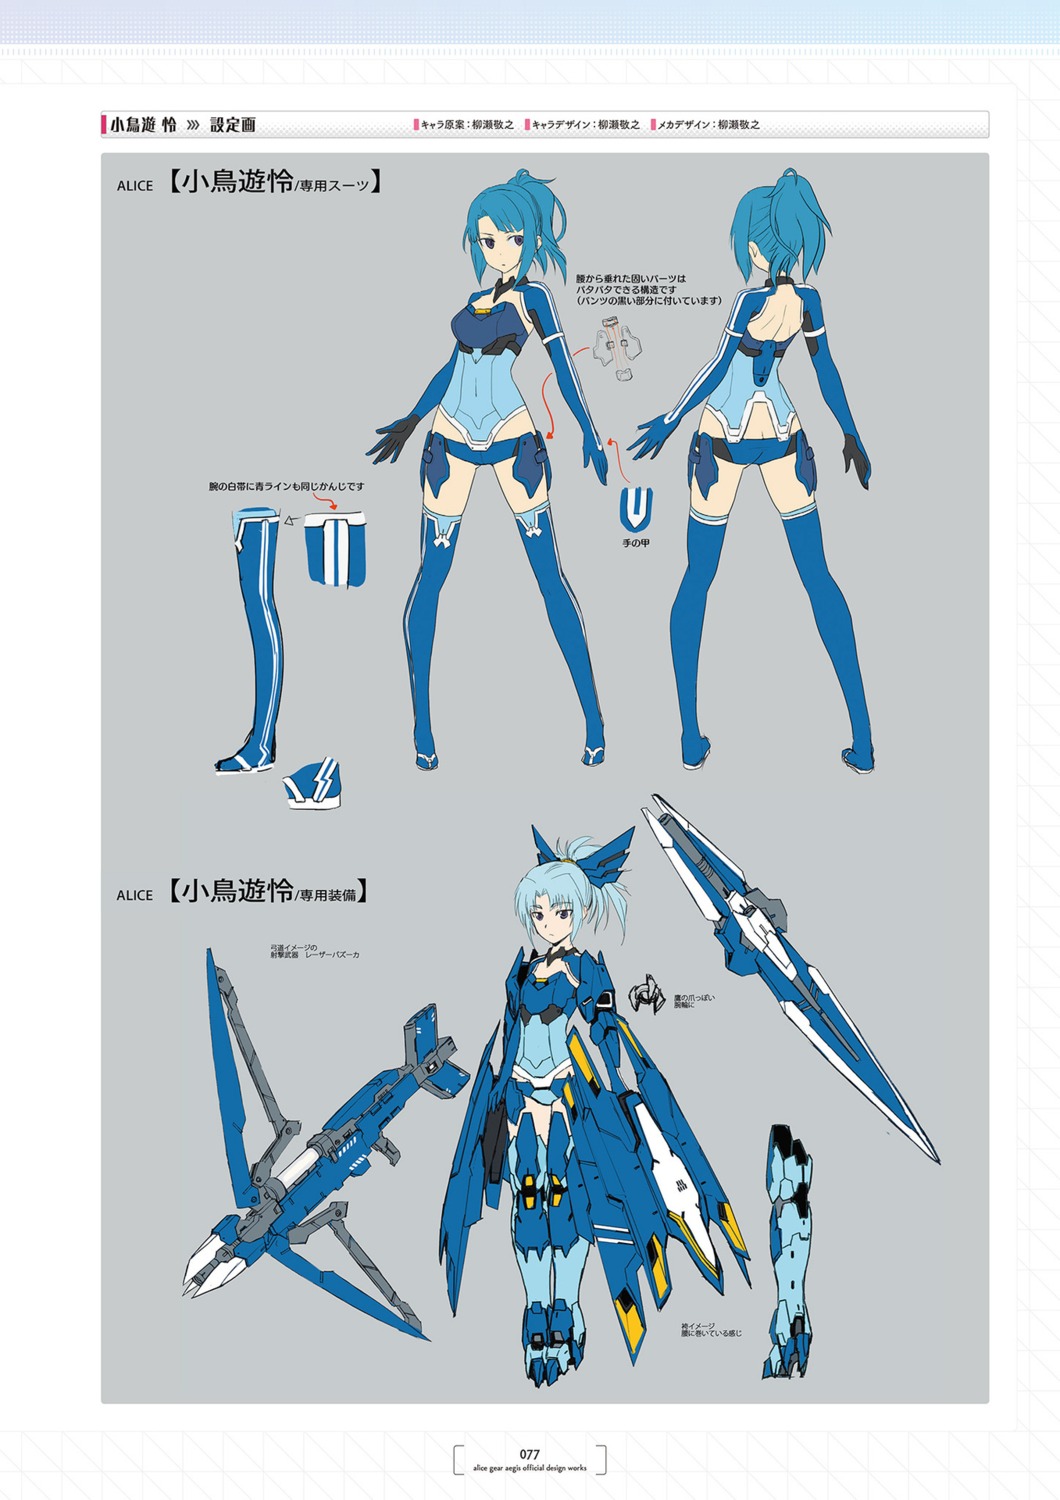 alice_gear_aegis character_design leotard takanashi_rei thighhighs weapon yanase_takayuki